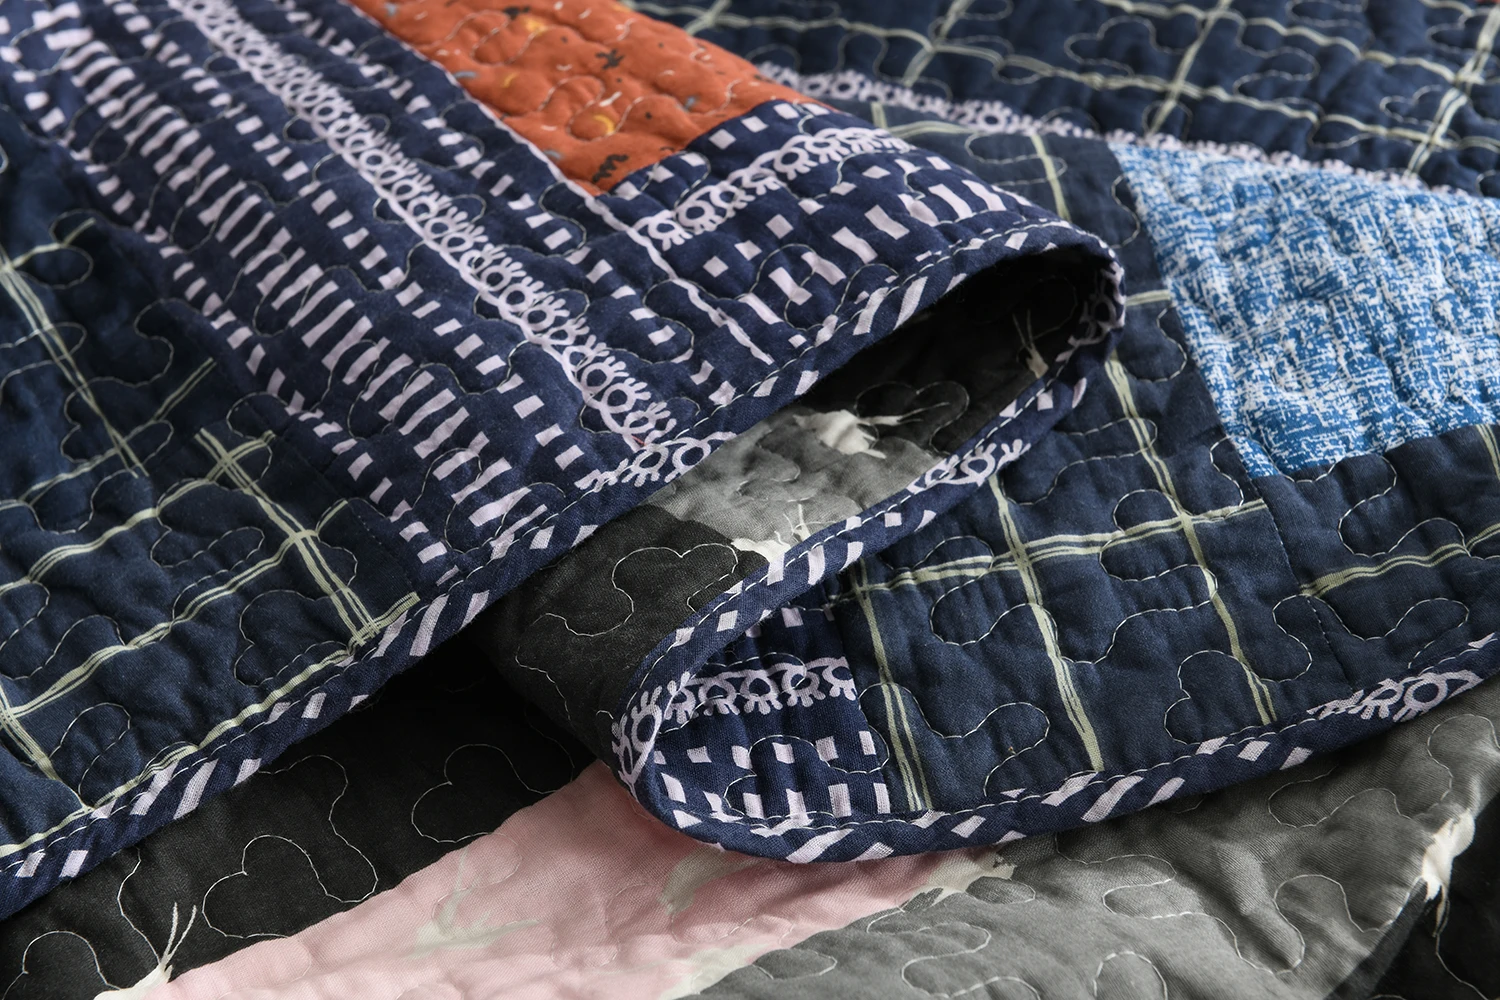 100% cotton embroidered handwork bedspread quilted bedspread set